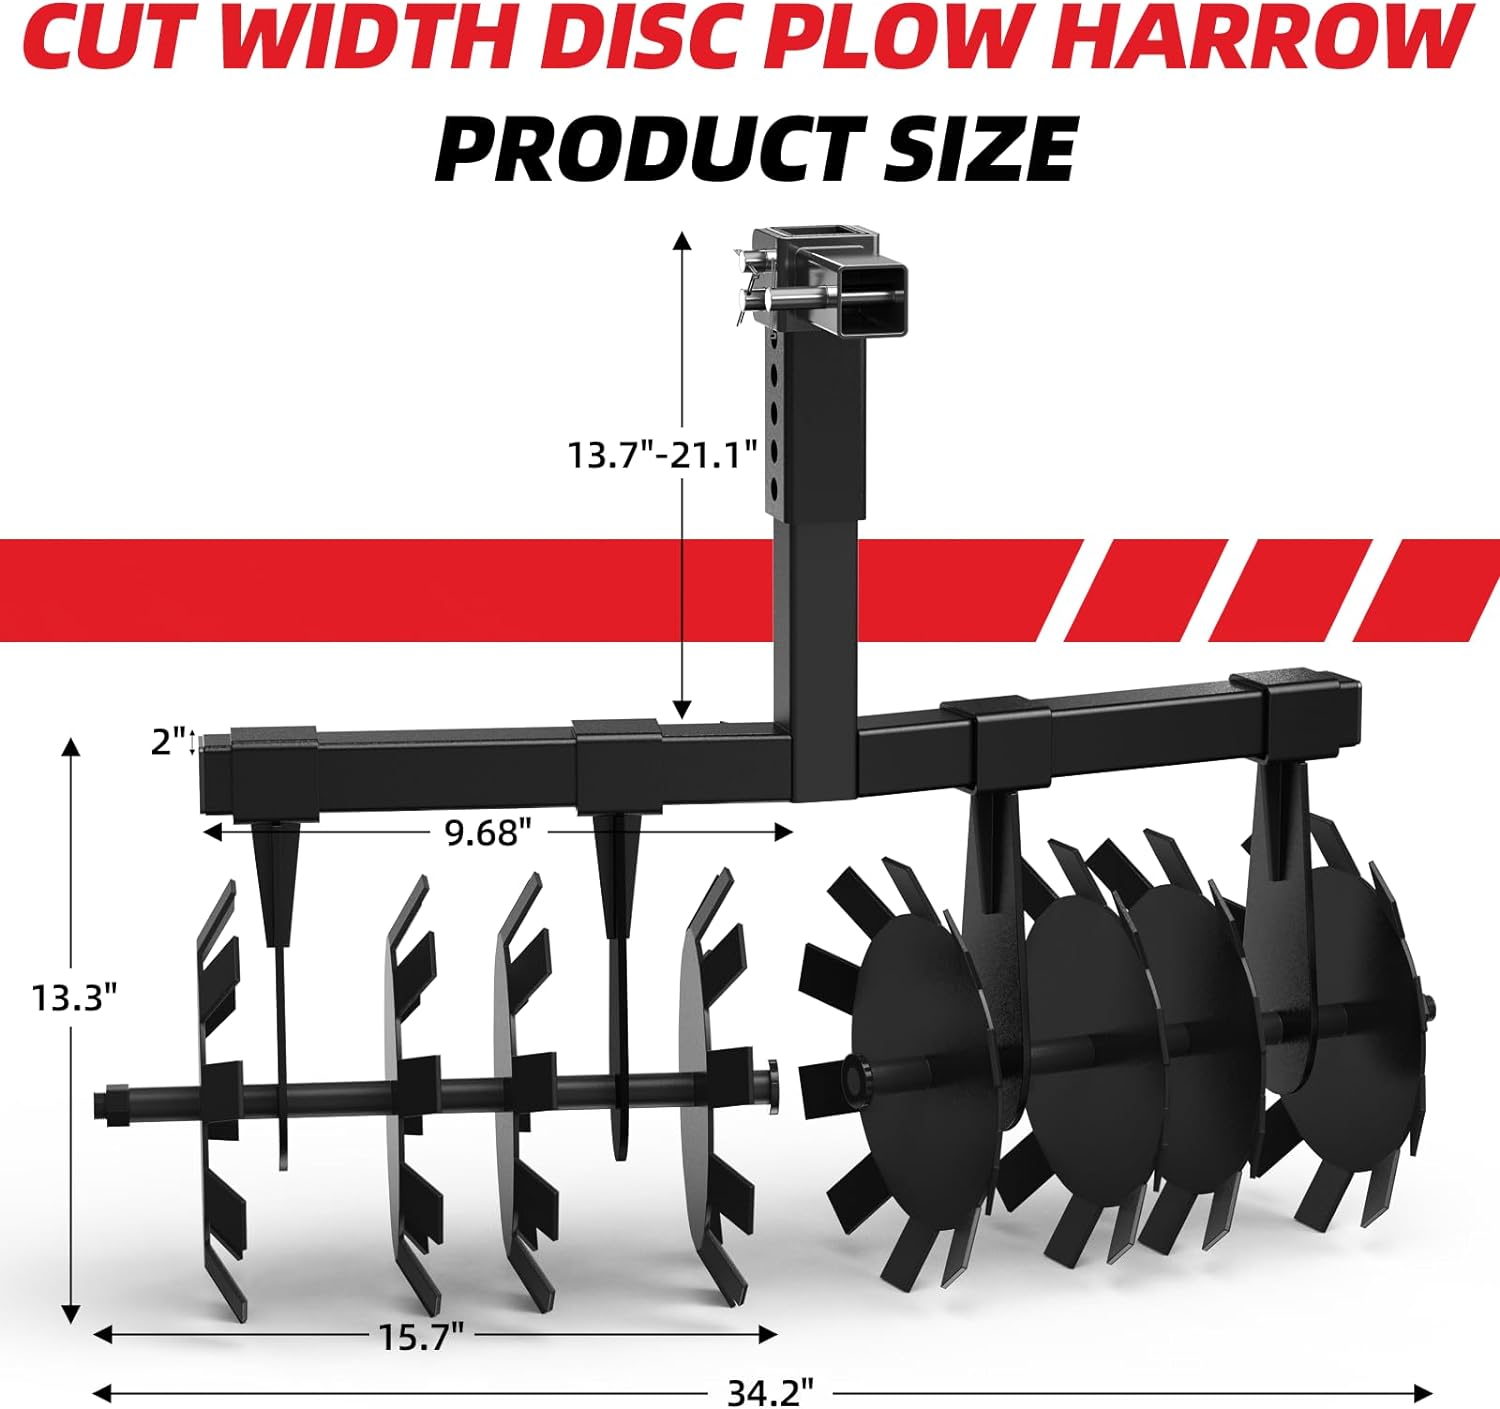 Disc Plow Harrow 32 Inch with Universal 2 Inch Receiver Mount for ATV/UTV, Adjust Height Heavy Duty Width Cut Disc Plow Durable Steel Round Plow Harrow